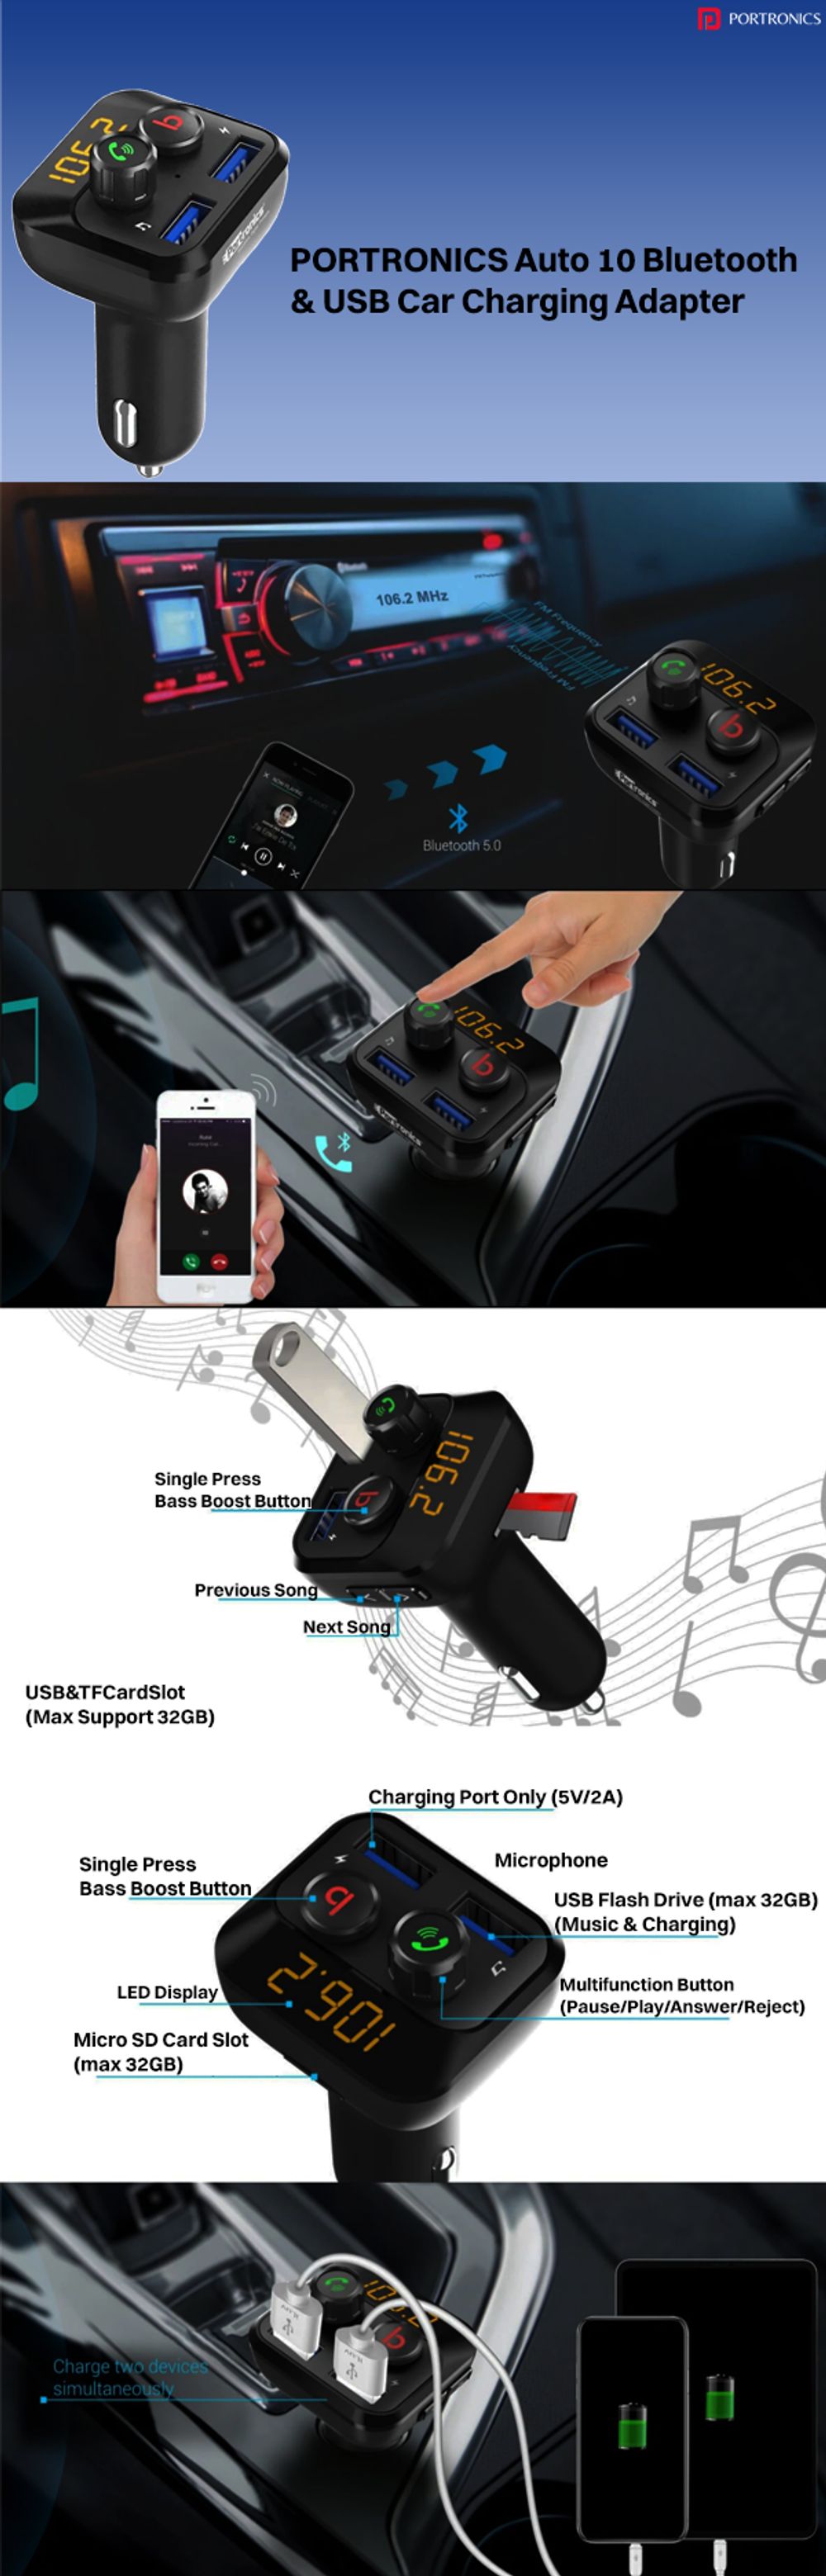 Portronics Auto 10 Bluetooth & USB Car Charging Adapter (POR 320, Blac